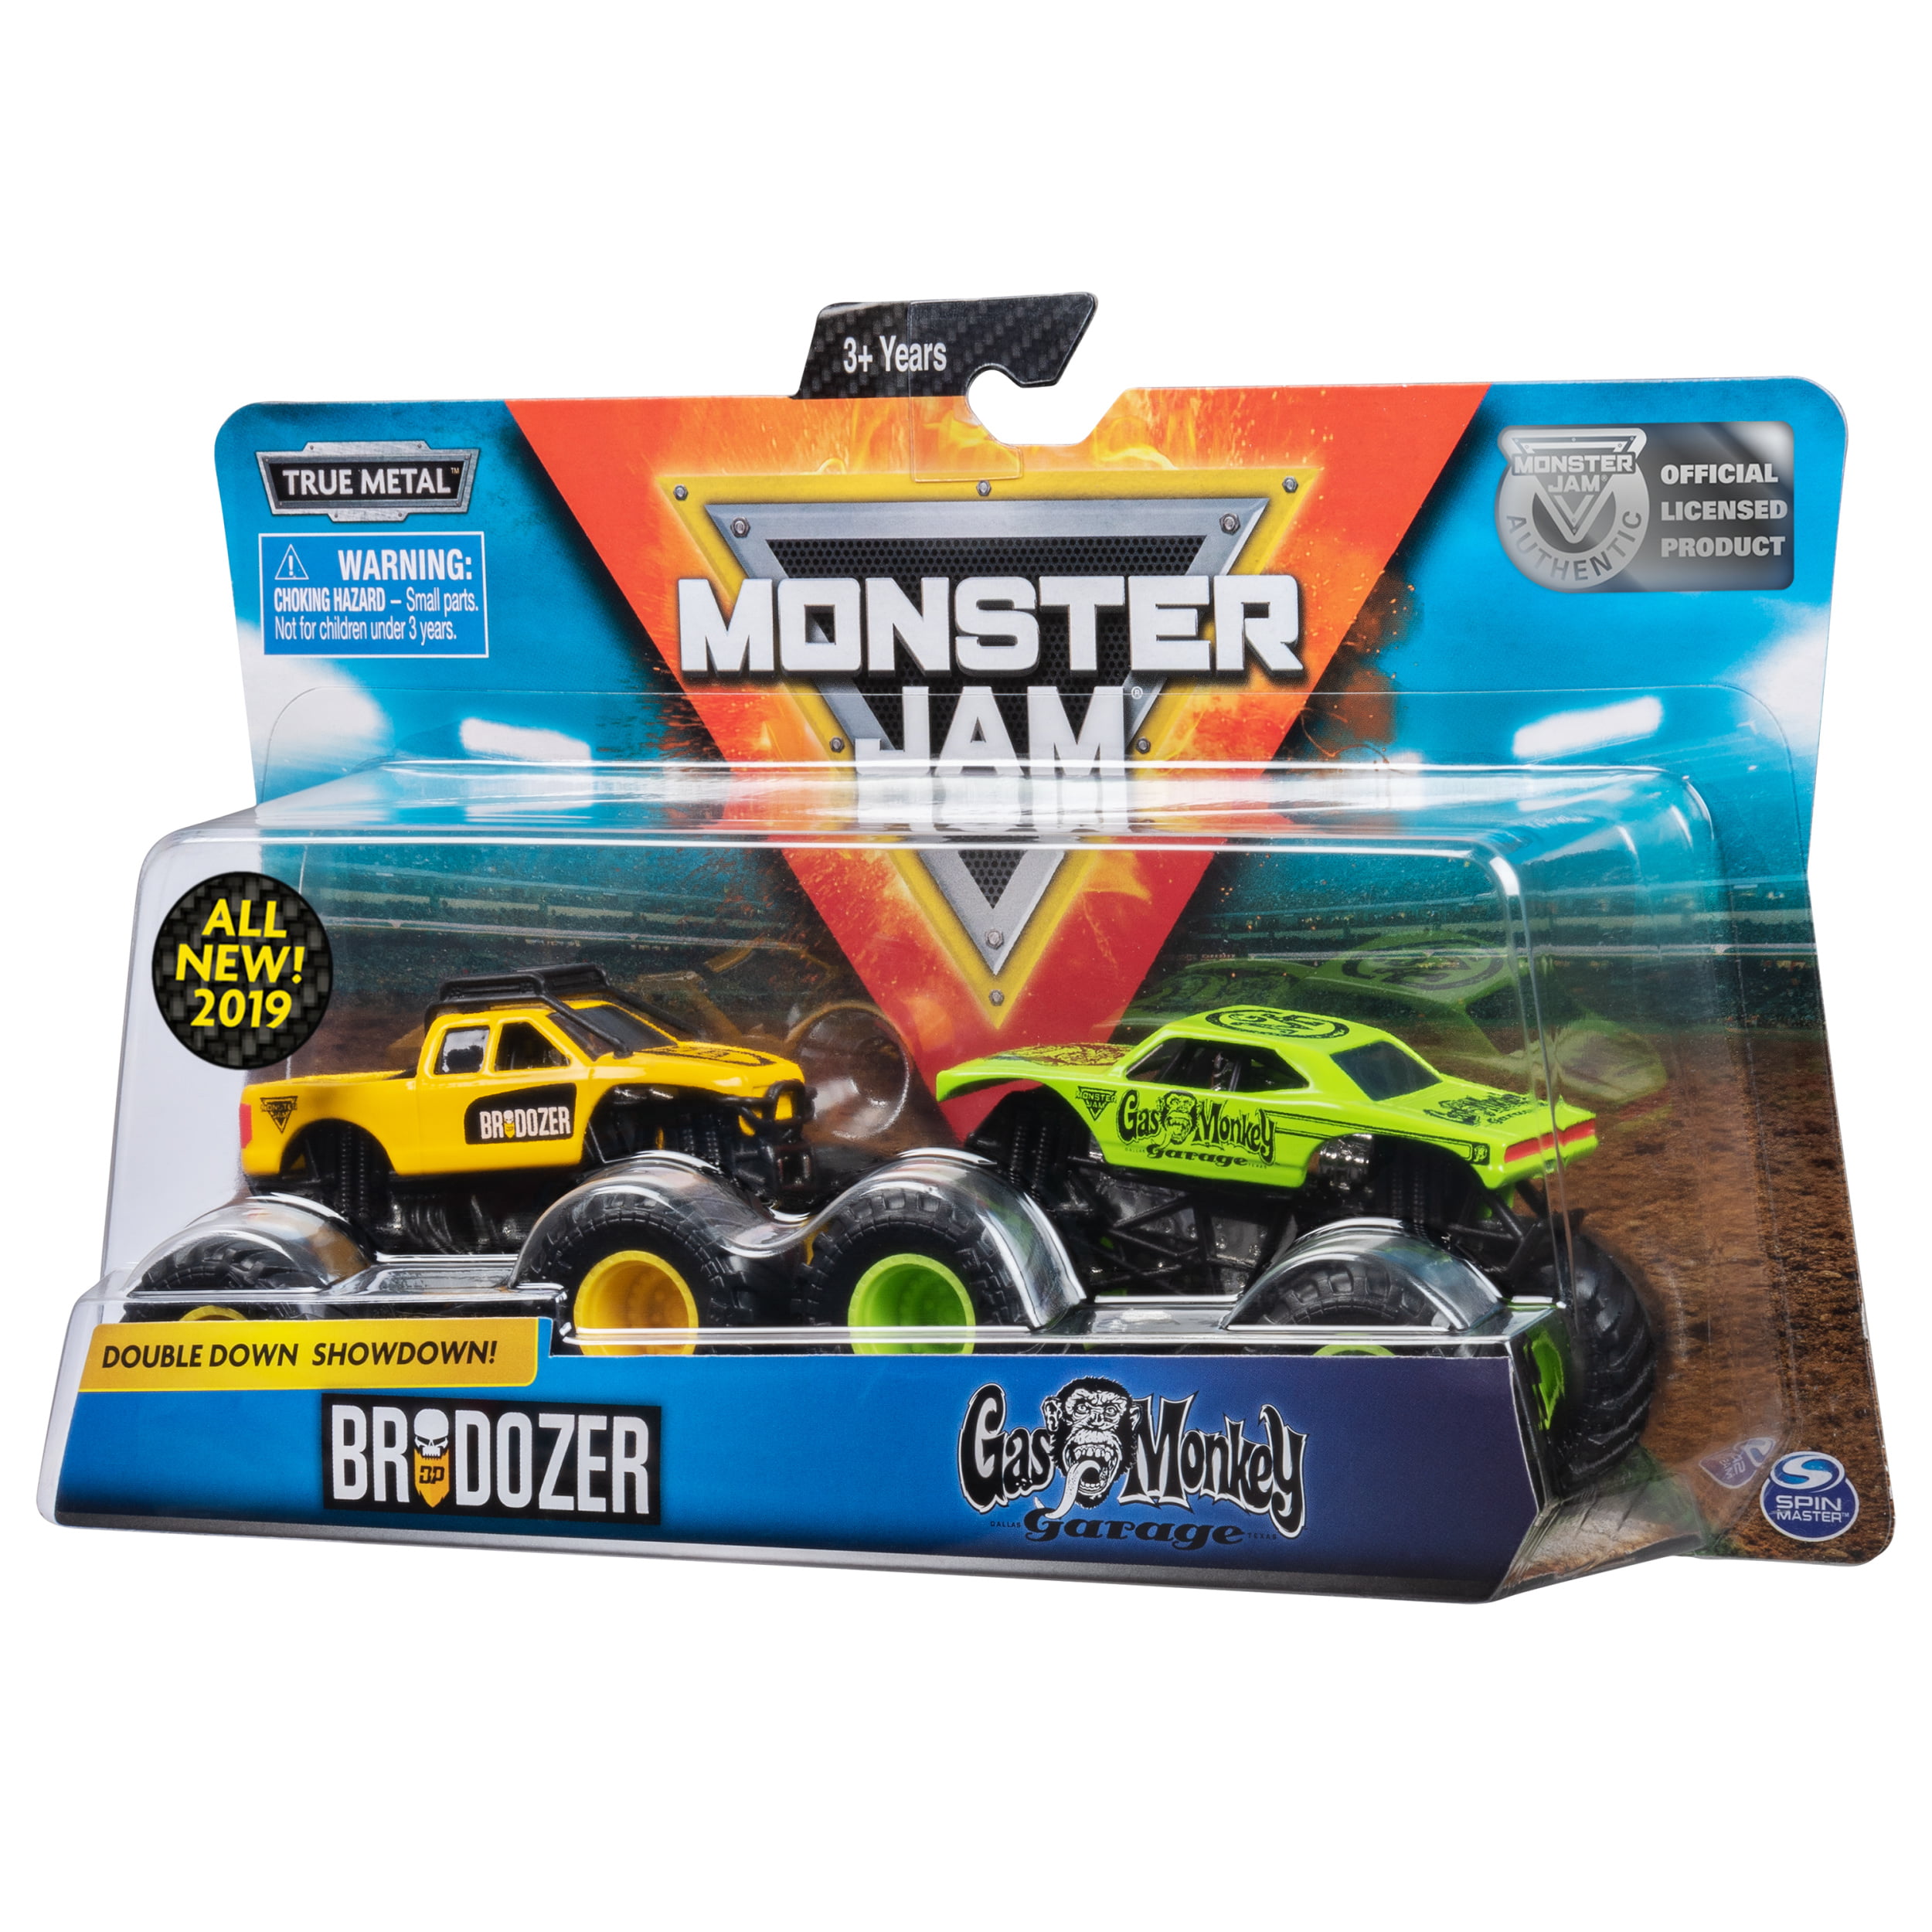 Monster Jam, Official Brodozer vs. Gas 